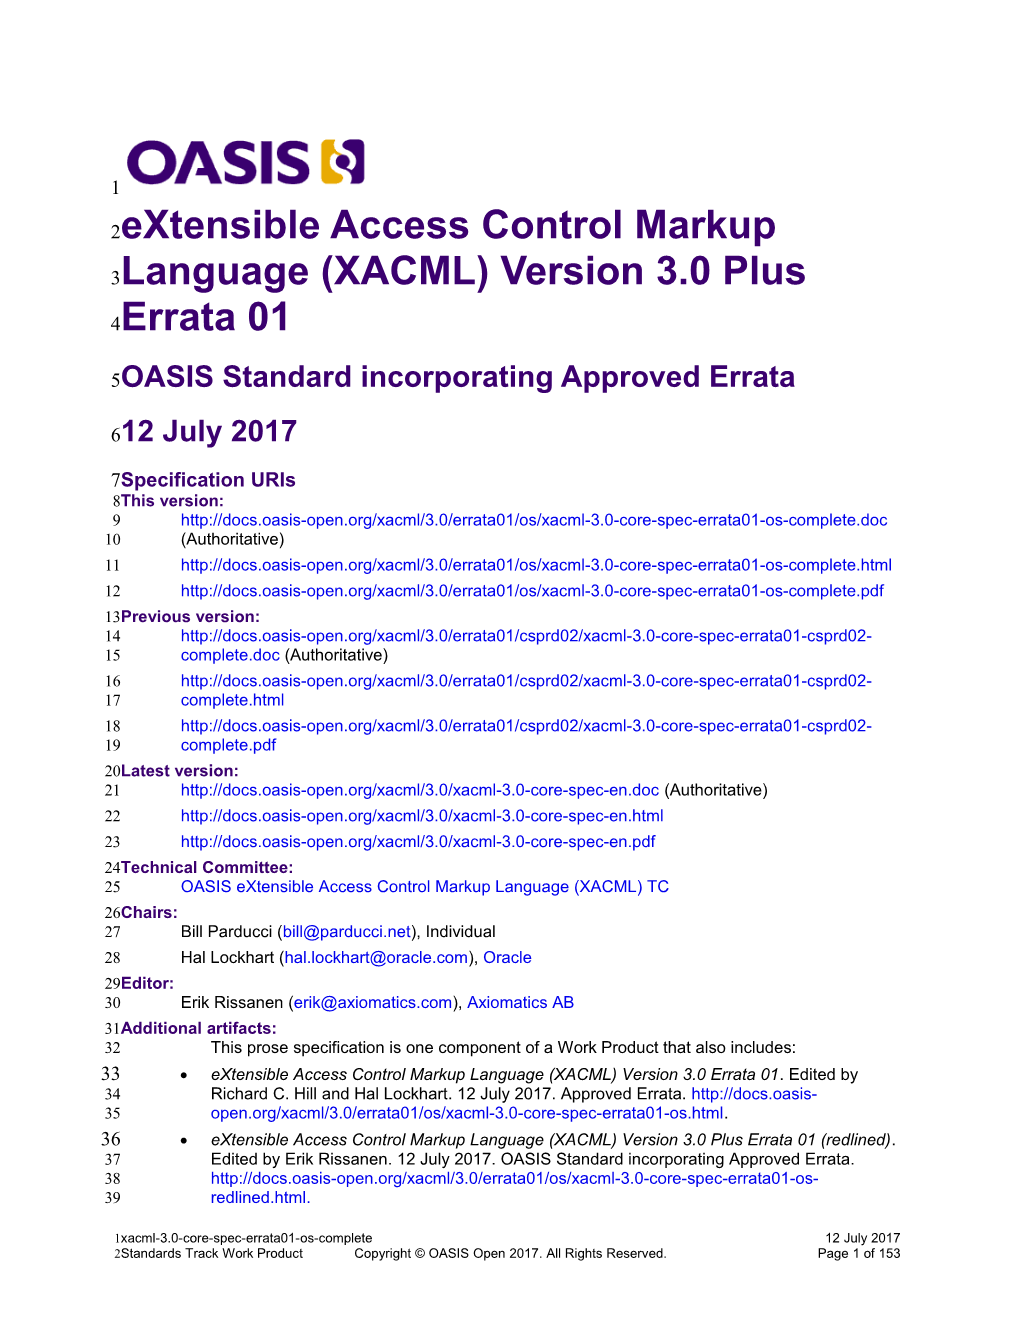 Extensible Access Control Markup Language (XACML) Version 3.0 Plus Errata 01